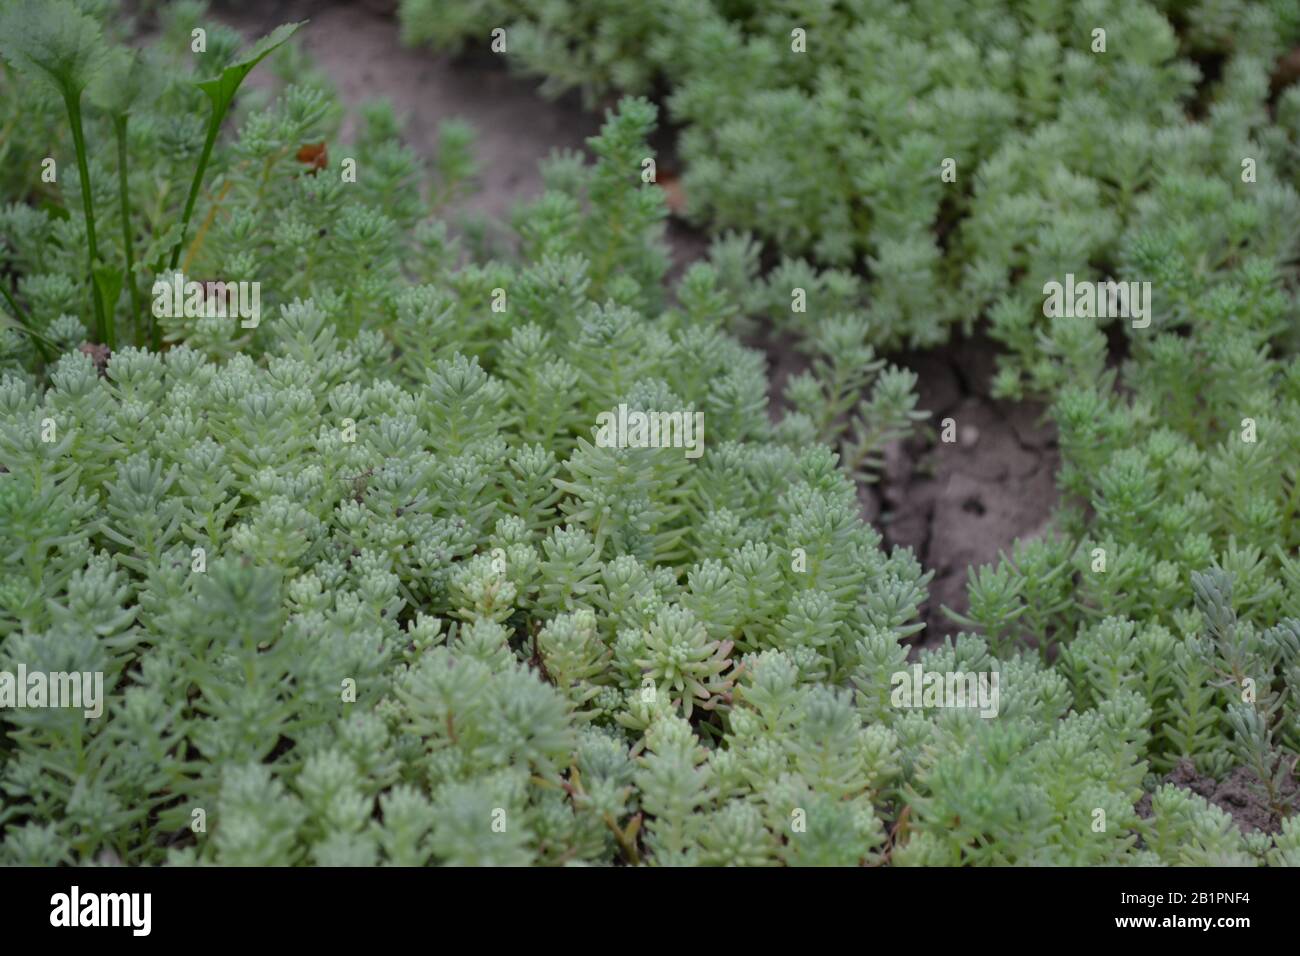 Hare cabbage. Stonecrop.  Sedum. Green moss. Decorative grassy carpet. Green flower bed decoration. Horizontal photo Stock Photo